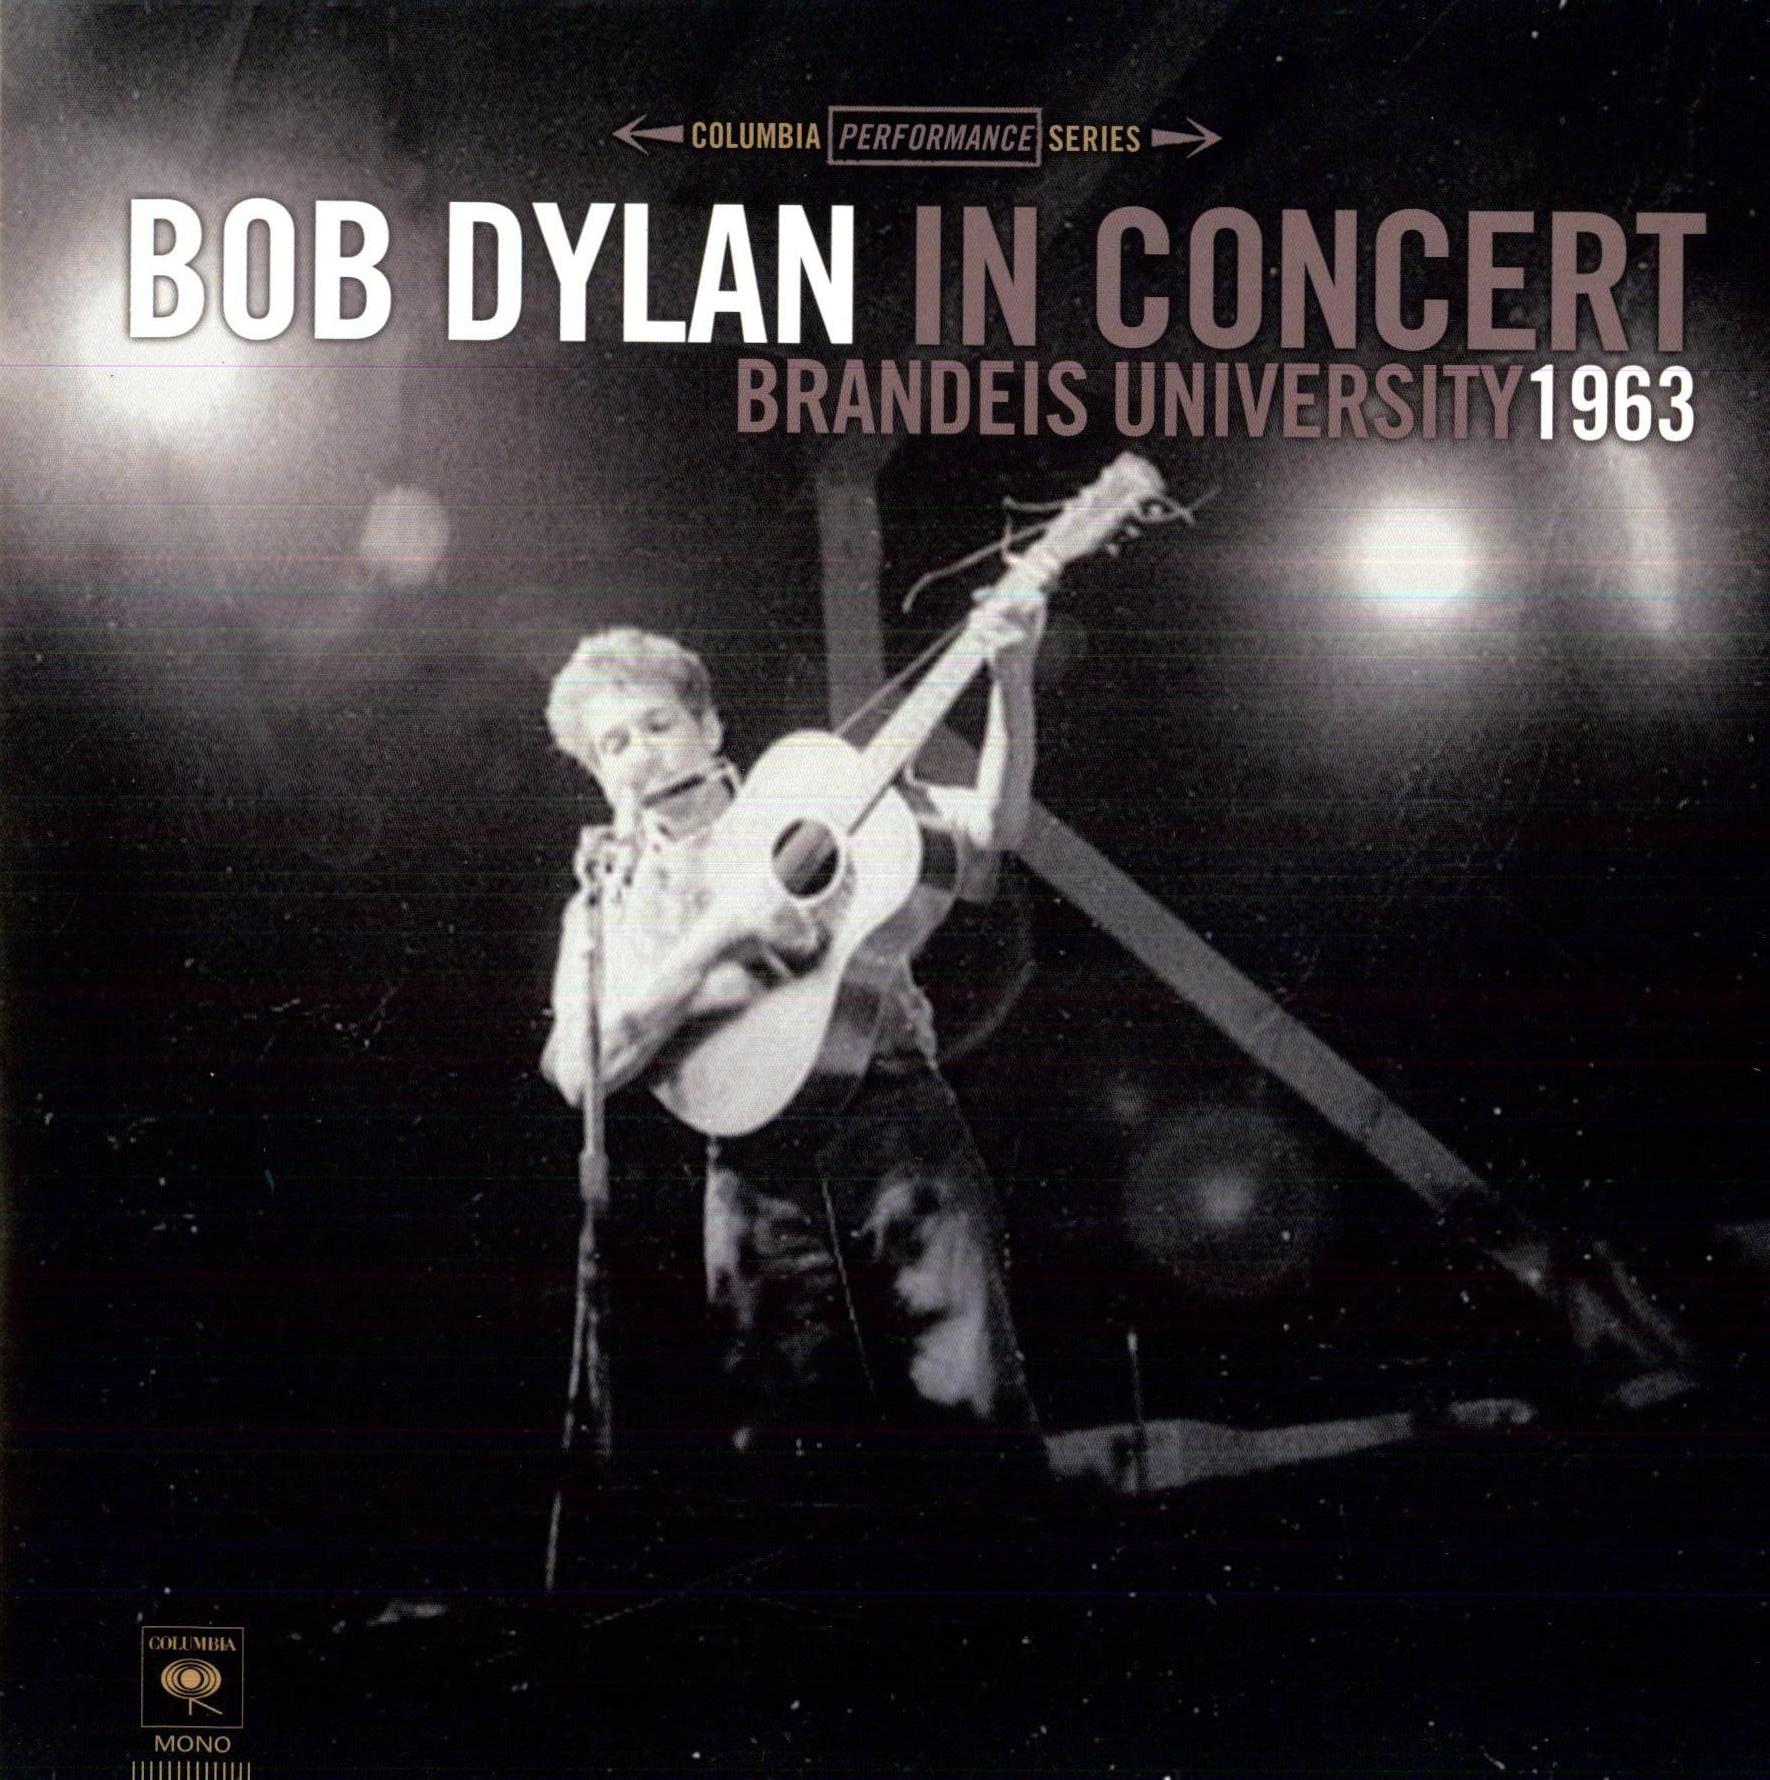 BOB DYLAN IN CONCERT: BTANDEIS UNIVERSITY 1963